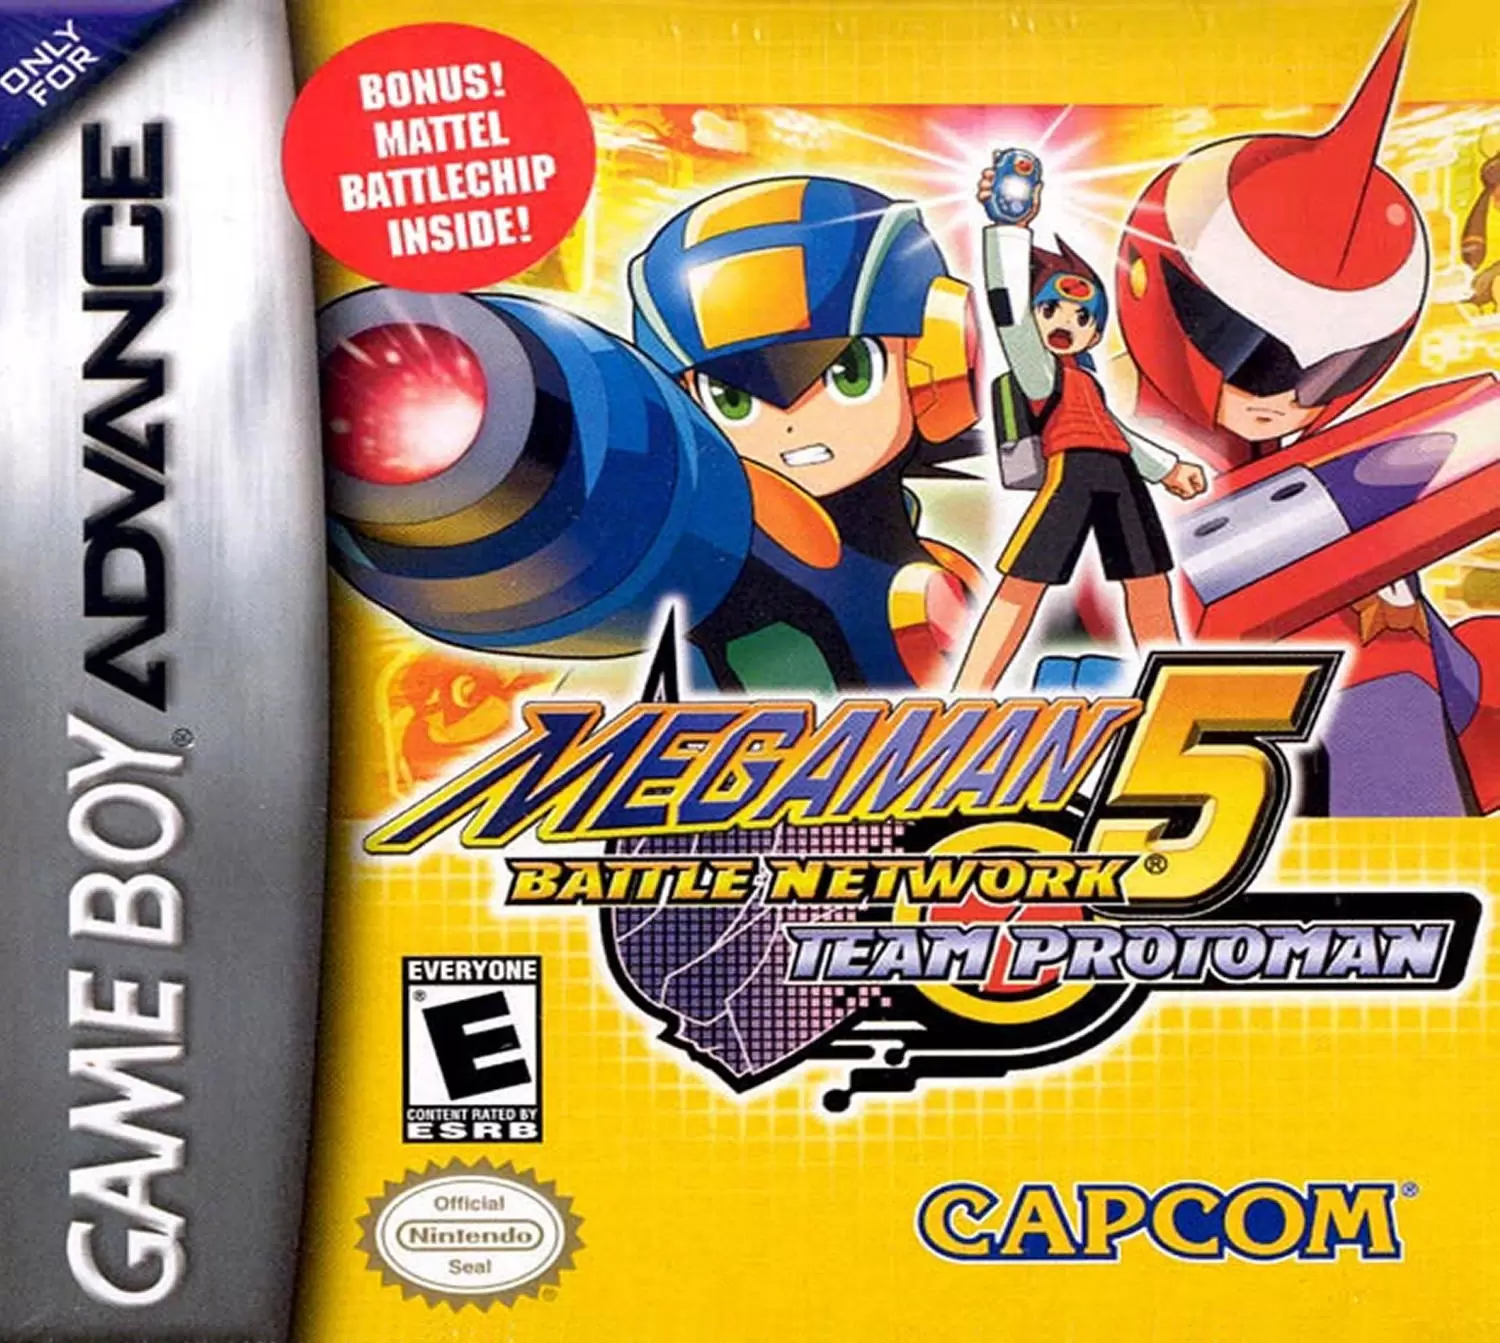 Game Boy Advance Games - Mega Man Battle Network 5: Team Protoman